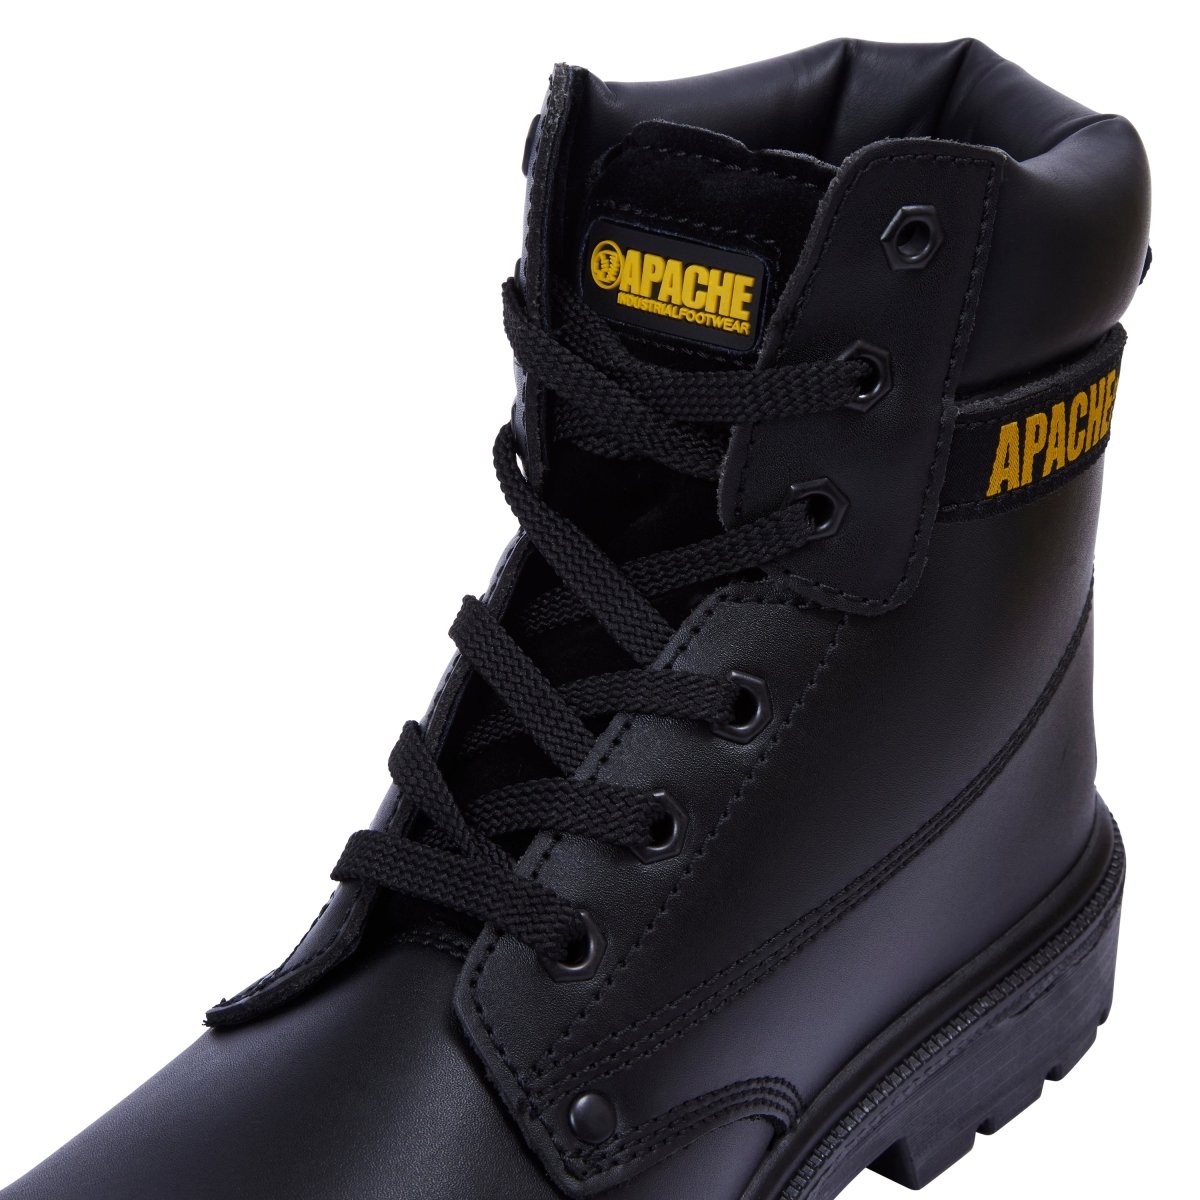 Apache AP300 Black Steel Toe Cap Safety Boots - Shoe Store Direct